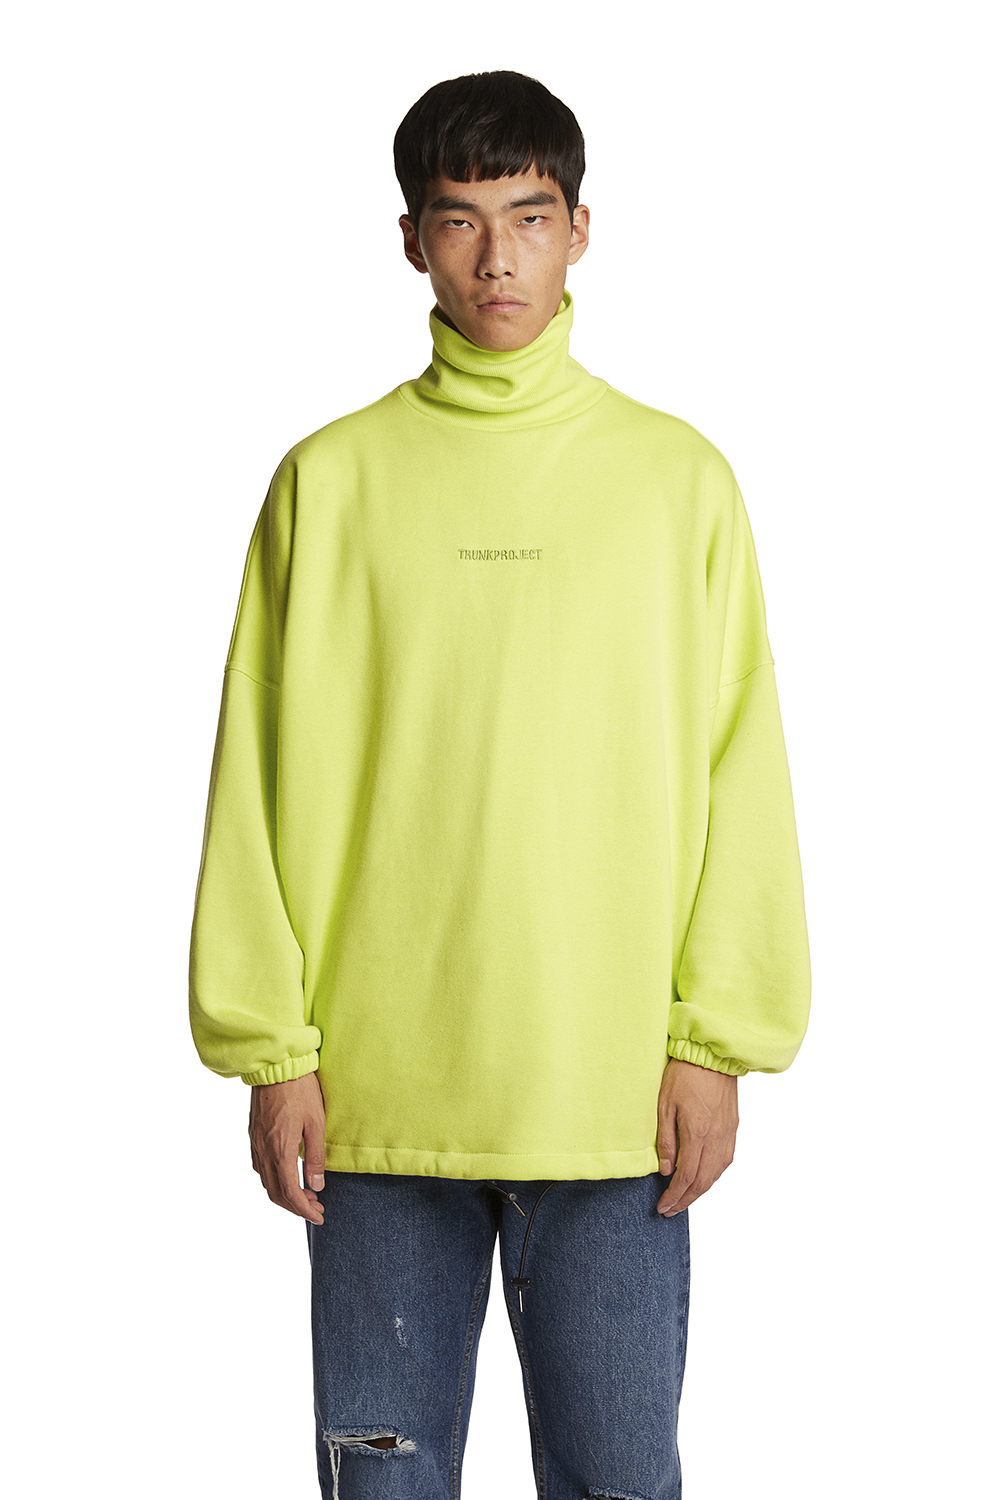 String Turtle Sweatshirts